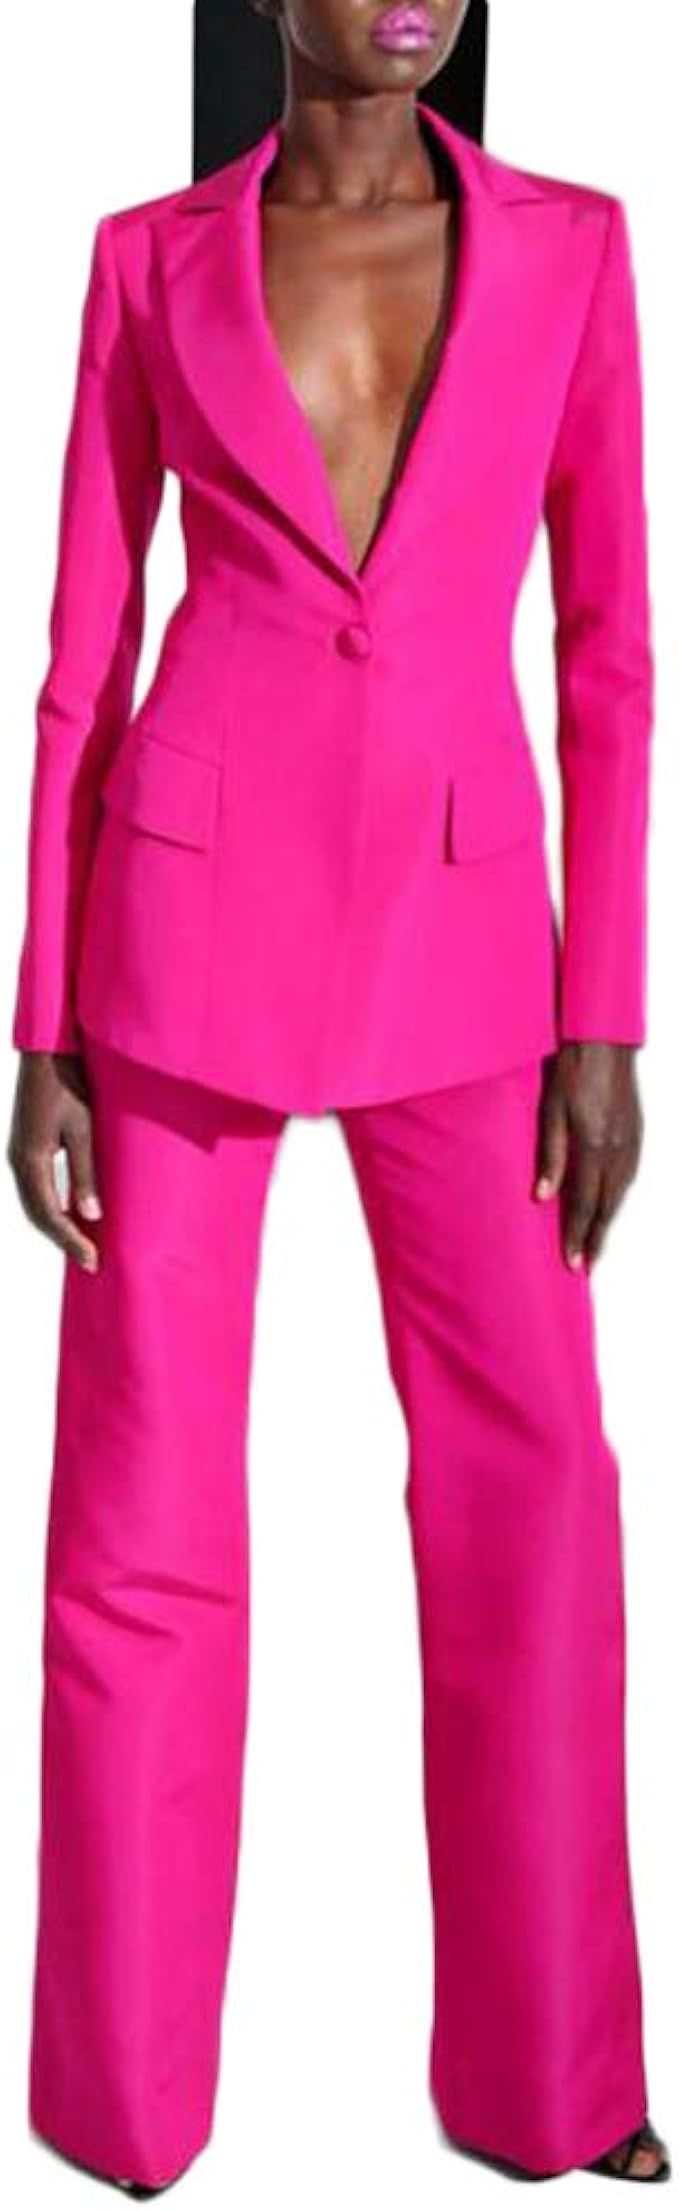 Women's Peak Lapel Hot Pink Business Suits 2 Pieces One Botton Wedding Groom Tuxedos | Amazon (US)